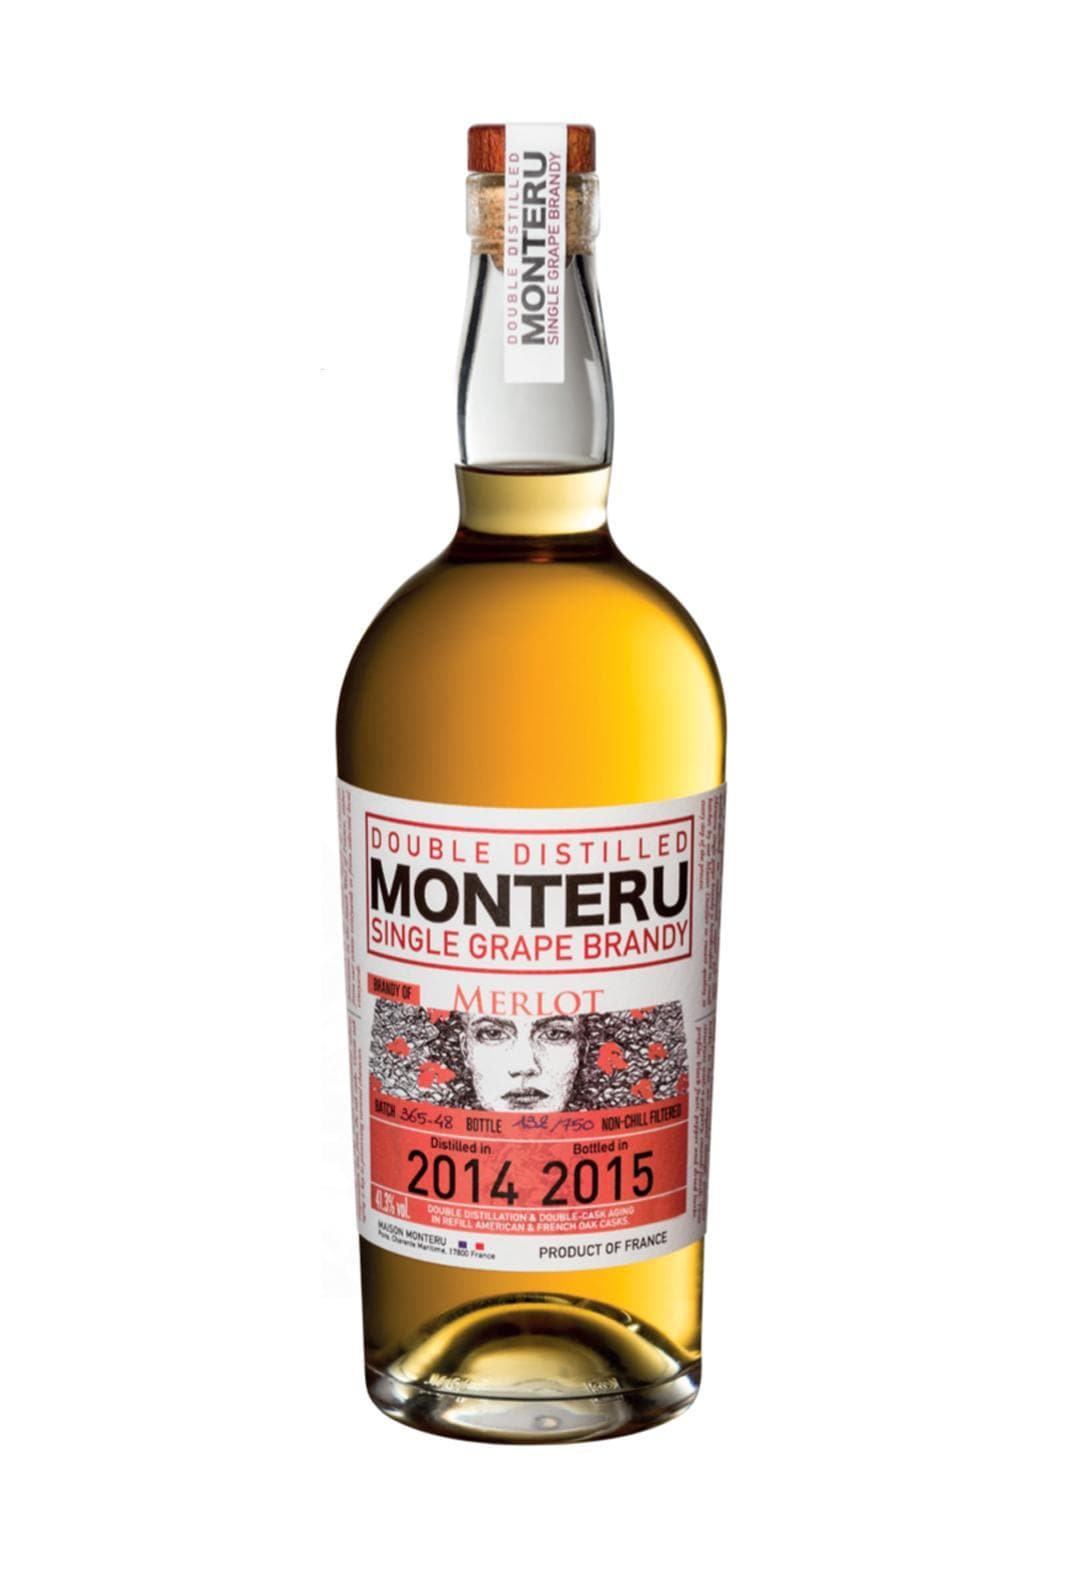 Naud Brandy Monteru Merlot 41.3% 700ml | Liquor & Spirits | Shop online at Spirits of France